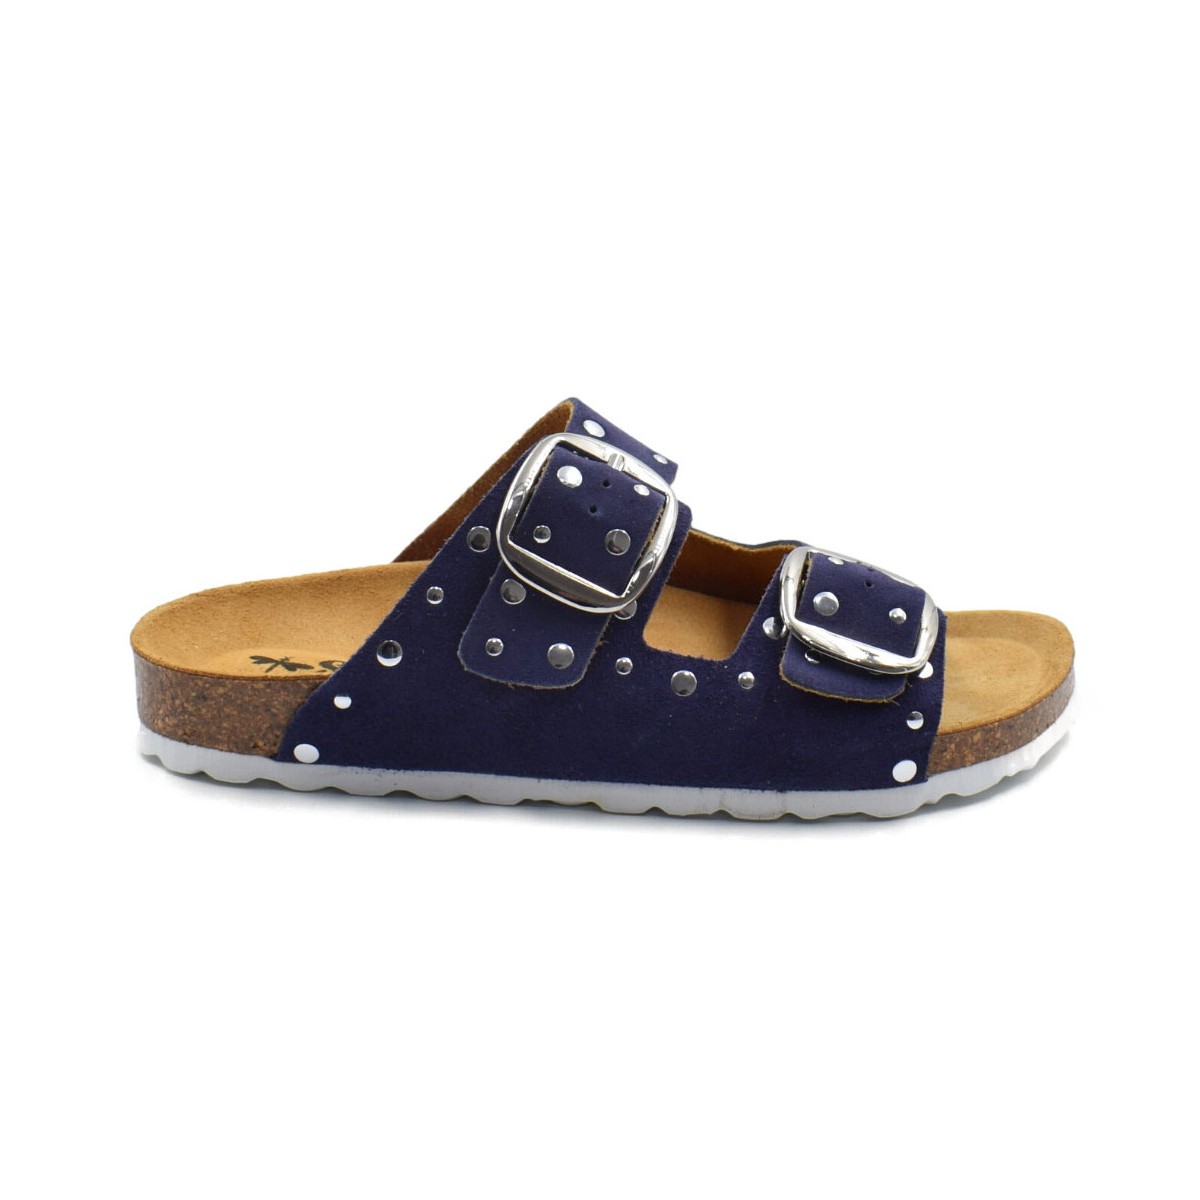 Blue flat bio leather sandals by Biocomfort